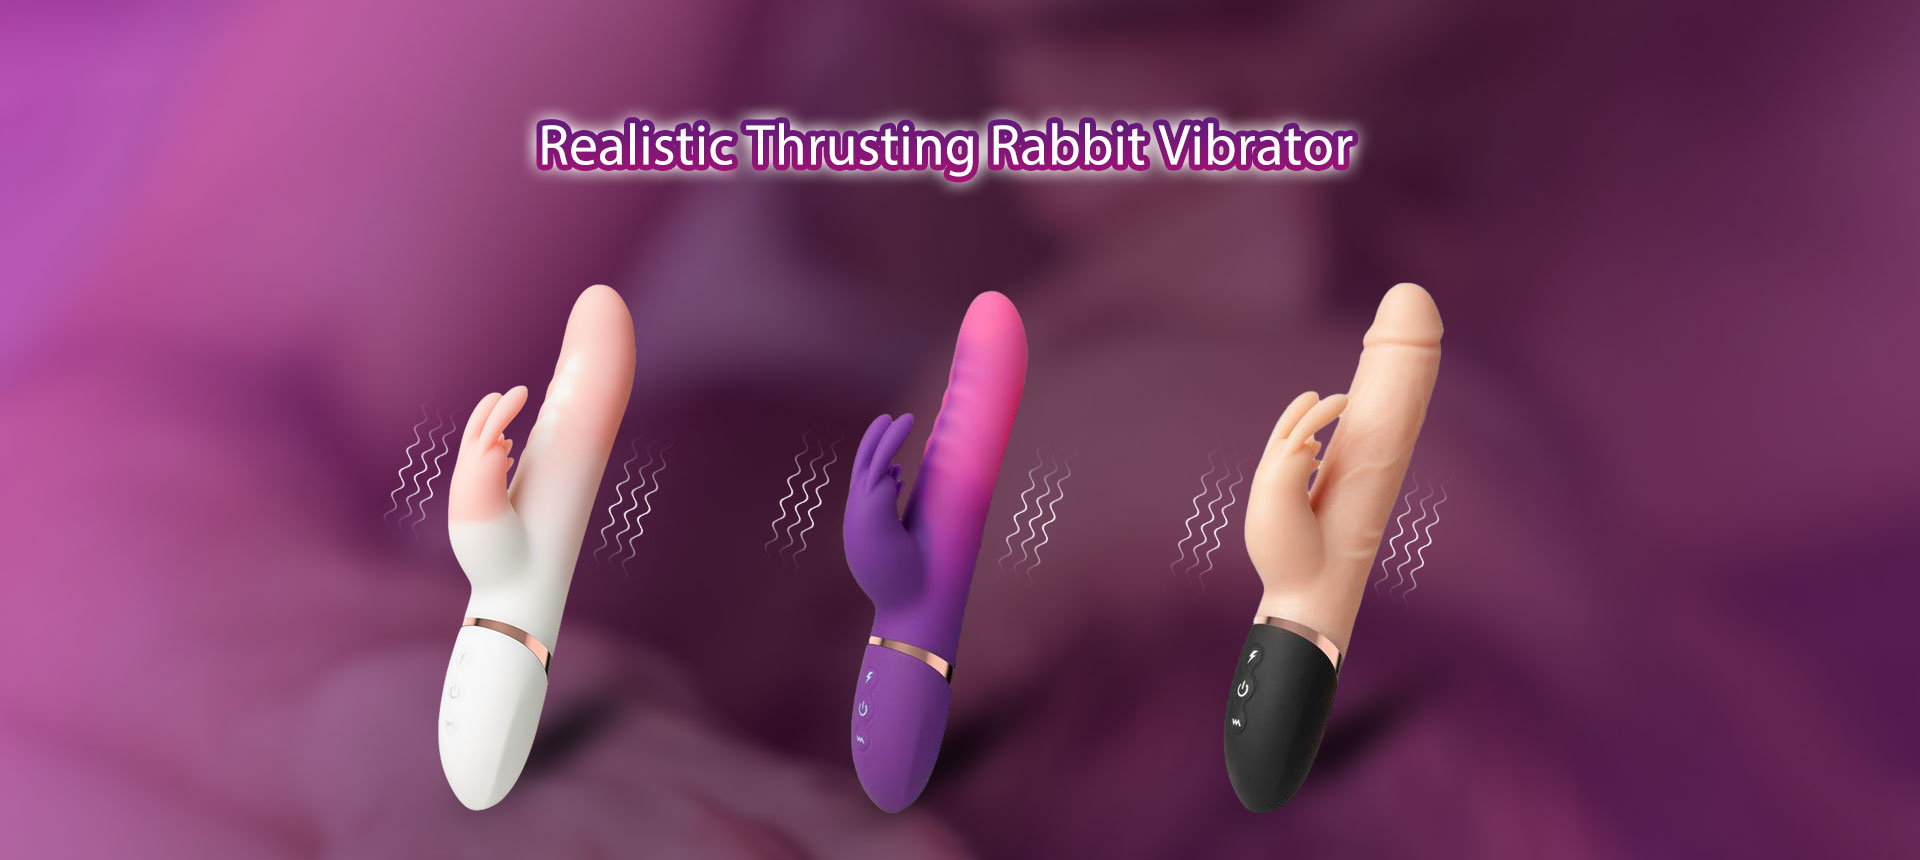 Pabrik RabbitVibrator Menyodorkan Realistis